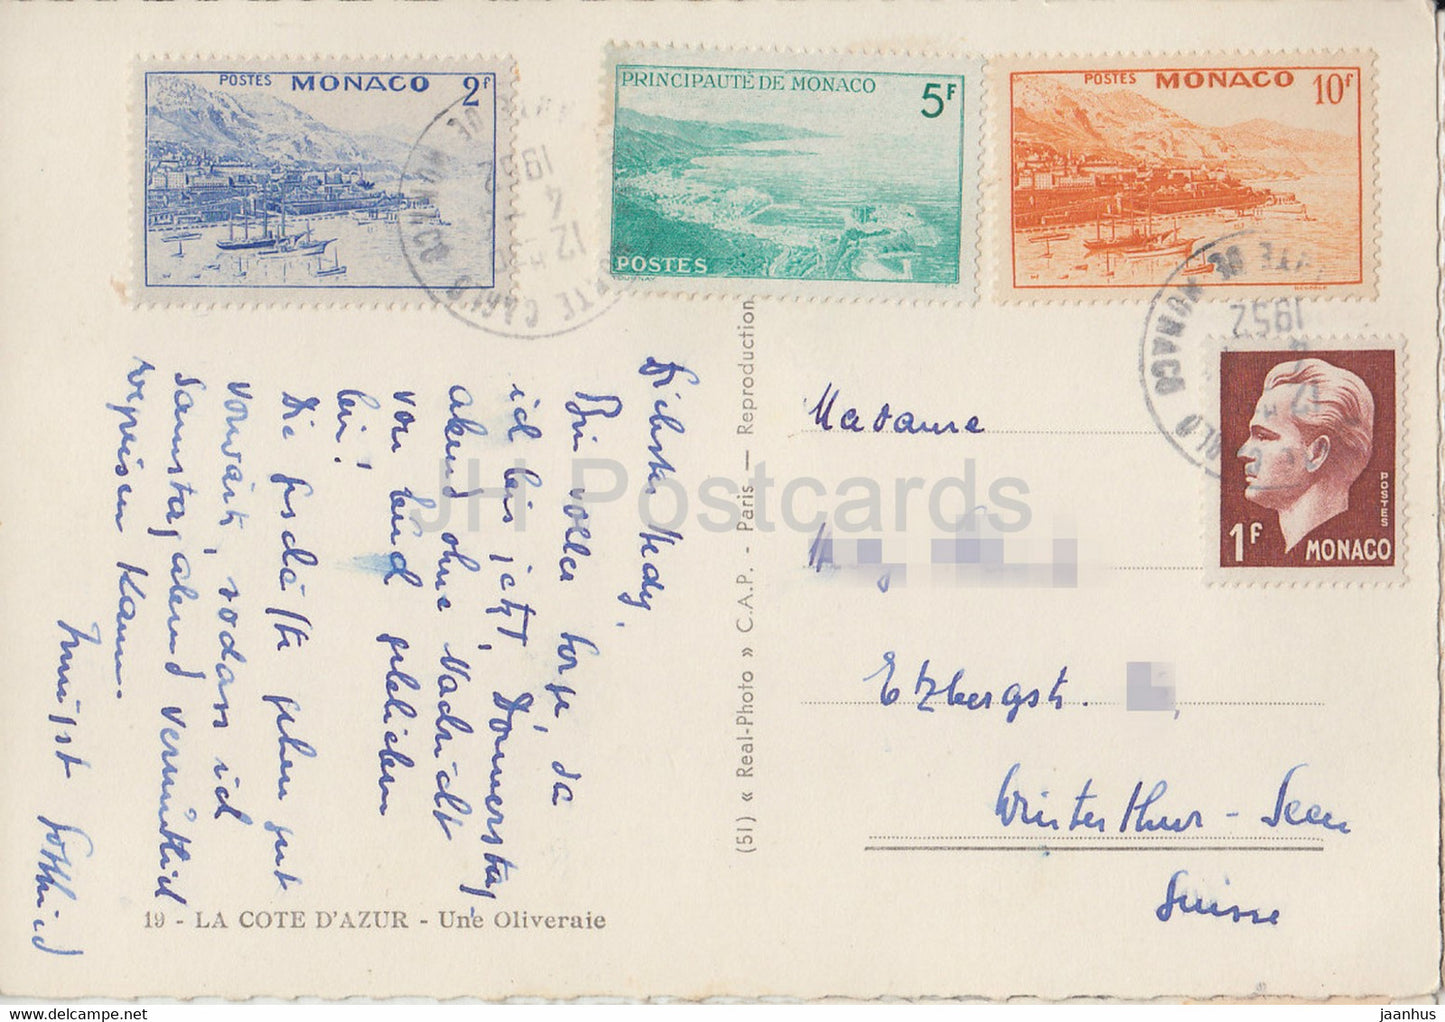 La Cote d'Azur - Une Oliveraie - old postcard - 1952 - France - used